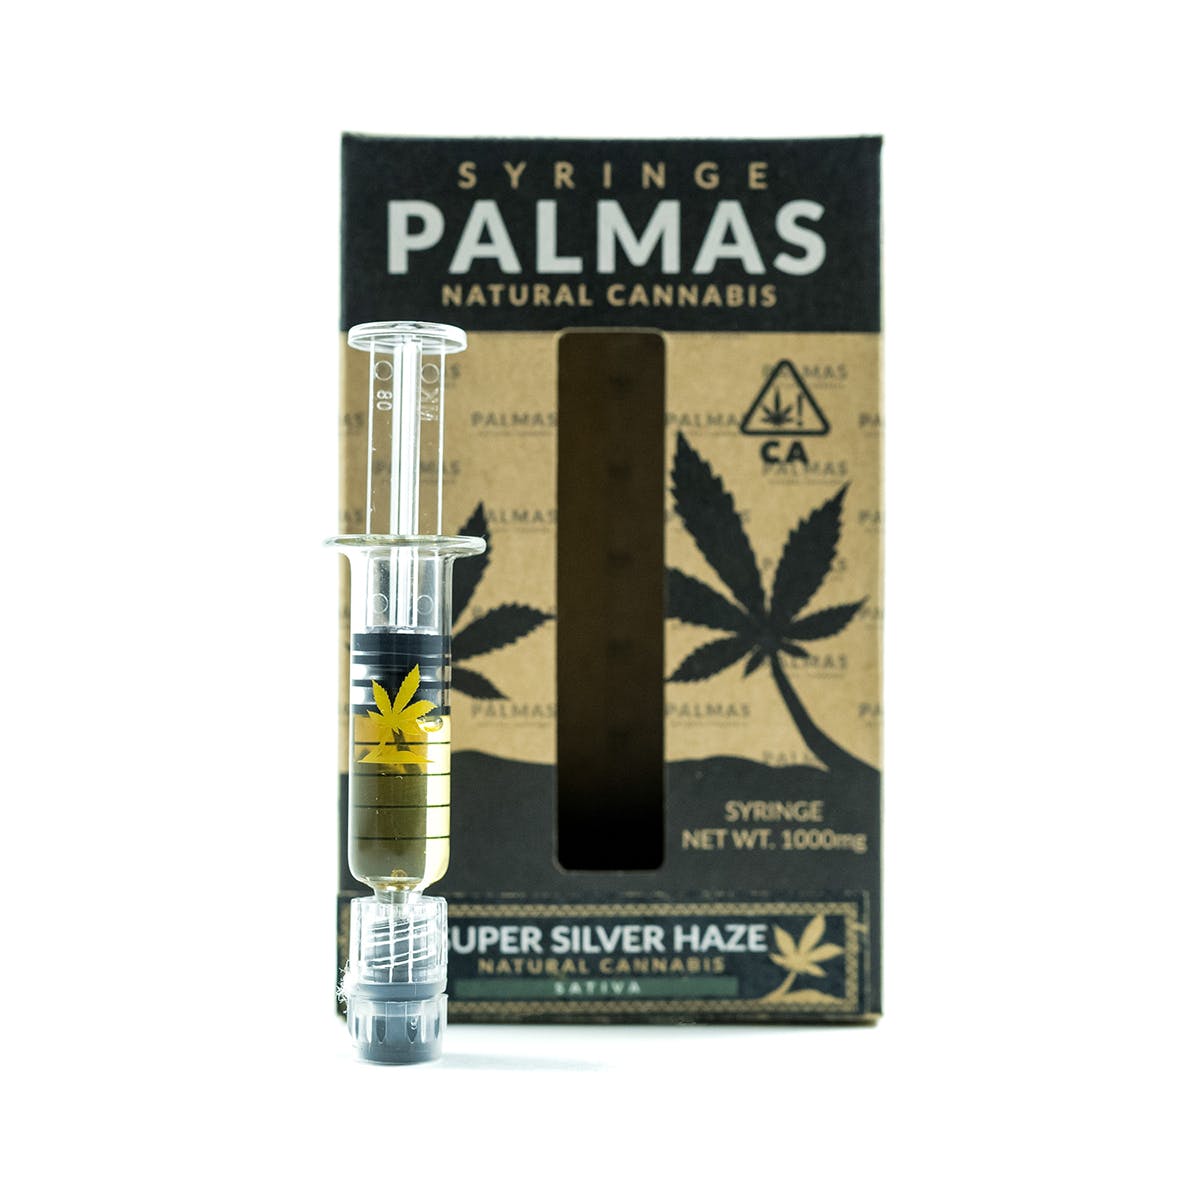 marijuana-dispensaries-og-florence-25-cap-in-los-angeles-palmas-syringe-super-silver-haze-1000mg